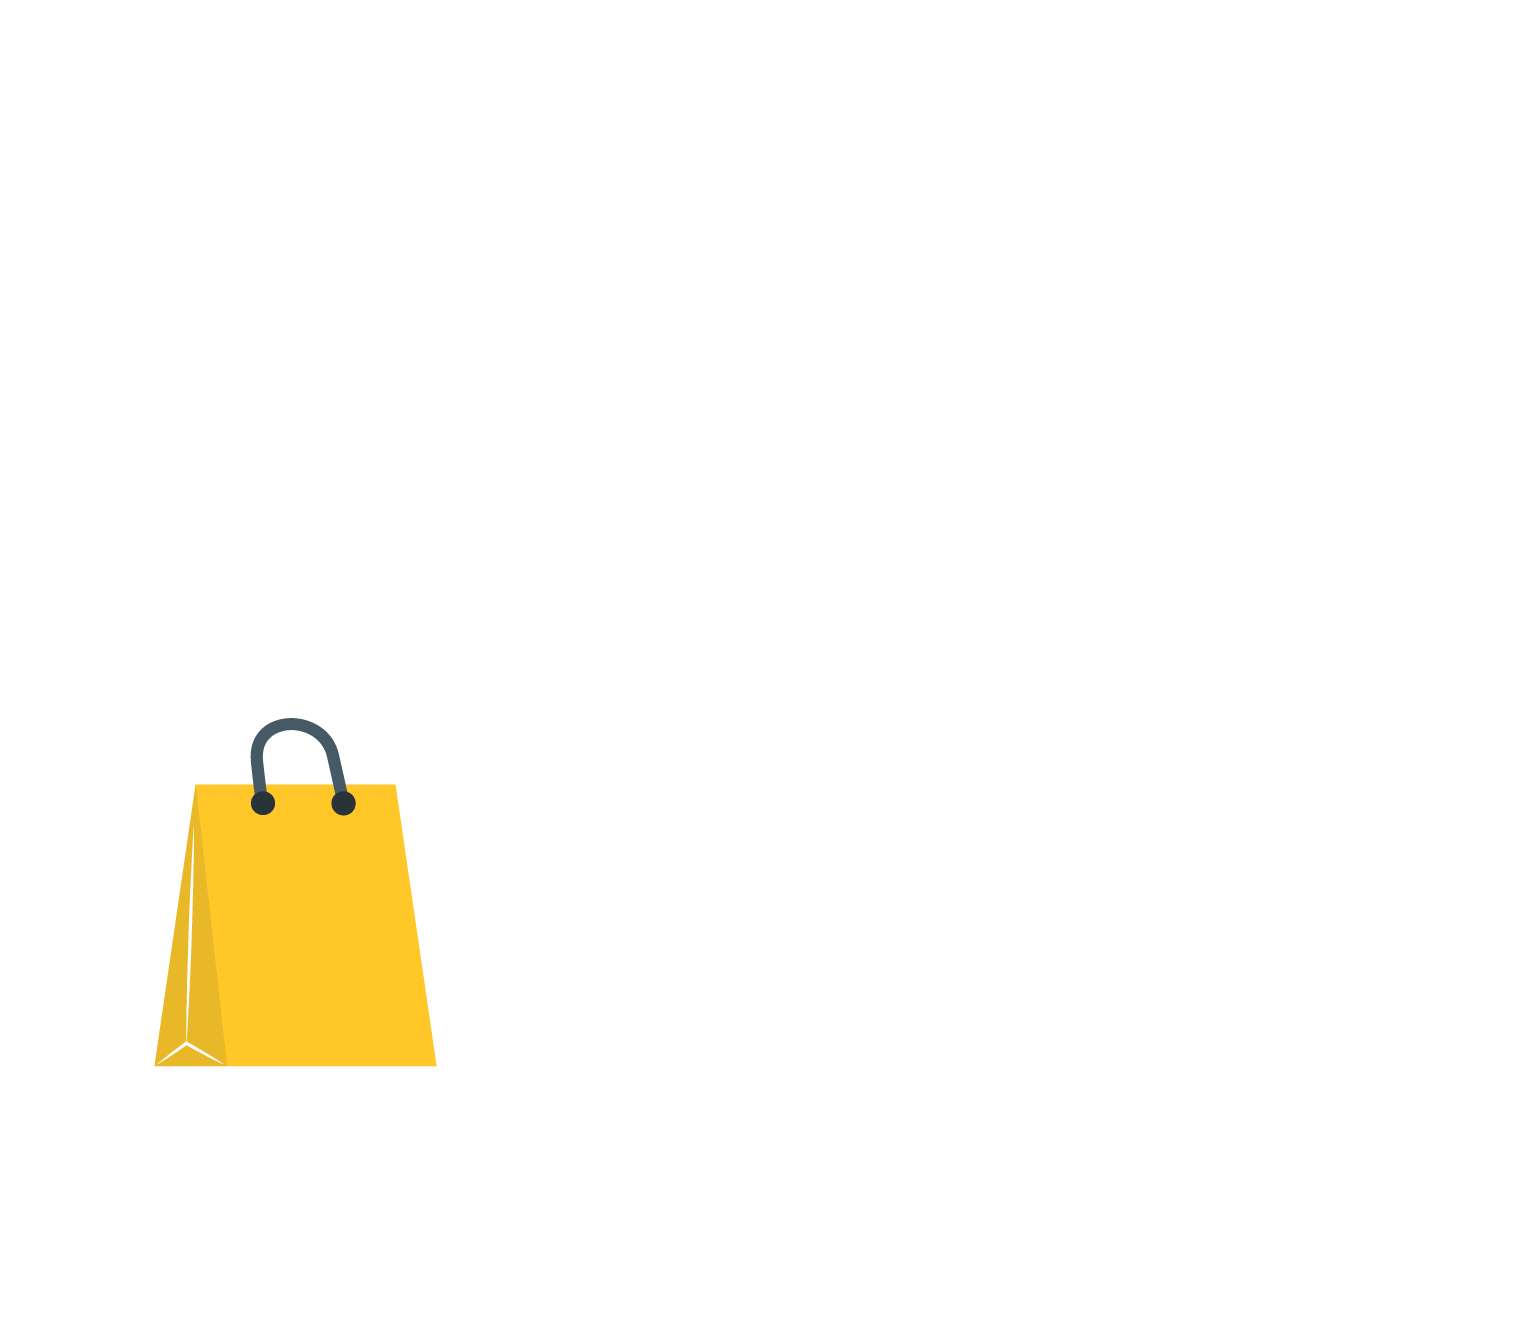 yellow shopping bag illustration